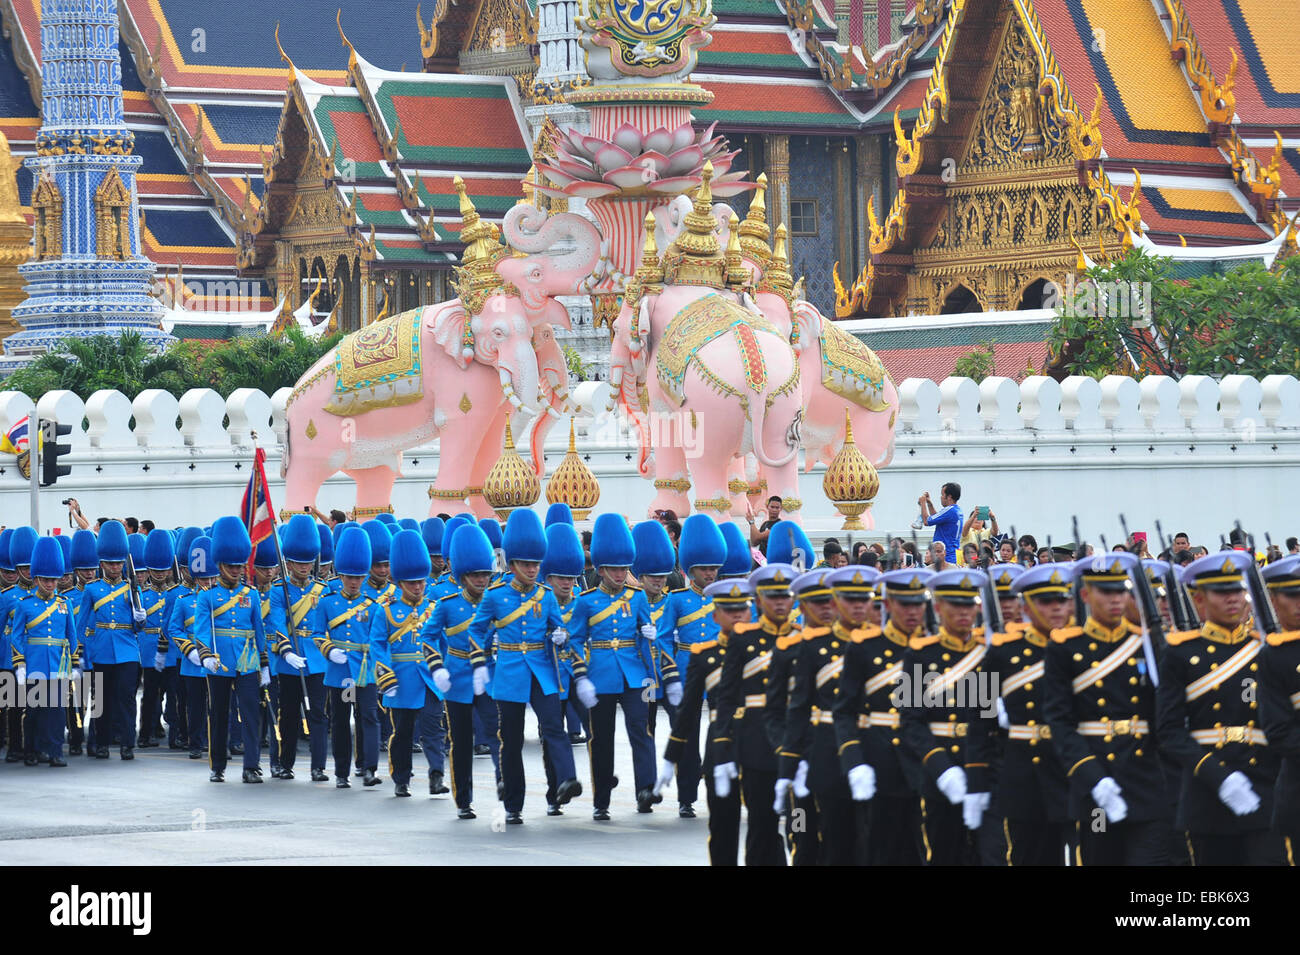 (141202) -- BANGKOK, Dec. 2, 2014 (Xinhua) -- Thai soldiers attend a parade as part of the King Bhumibol Adulyadej's upcoming 87th birthday celebration outside the Grand Palace in Bangkok, Thailand, Dec. 2, 2014. Thai King Bhumibol Adulyadej will celebrate his 87th birthday on Dec. 5. (Xinhua/Rachen Sageamsak) (djj) Stock Photo